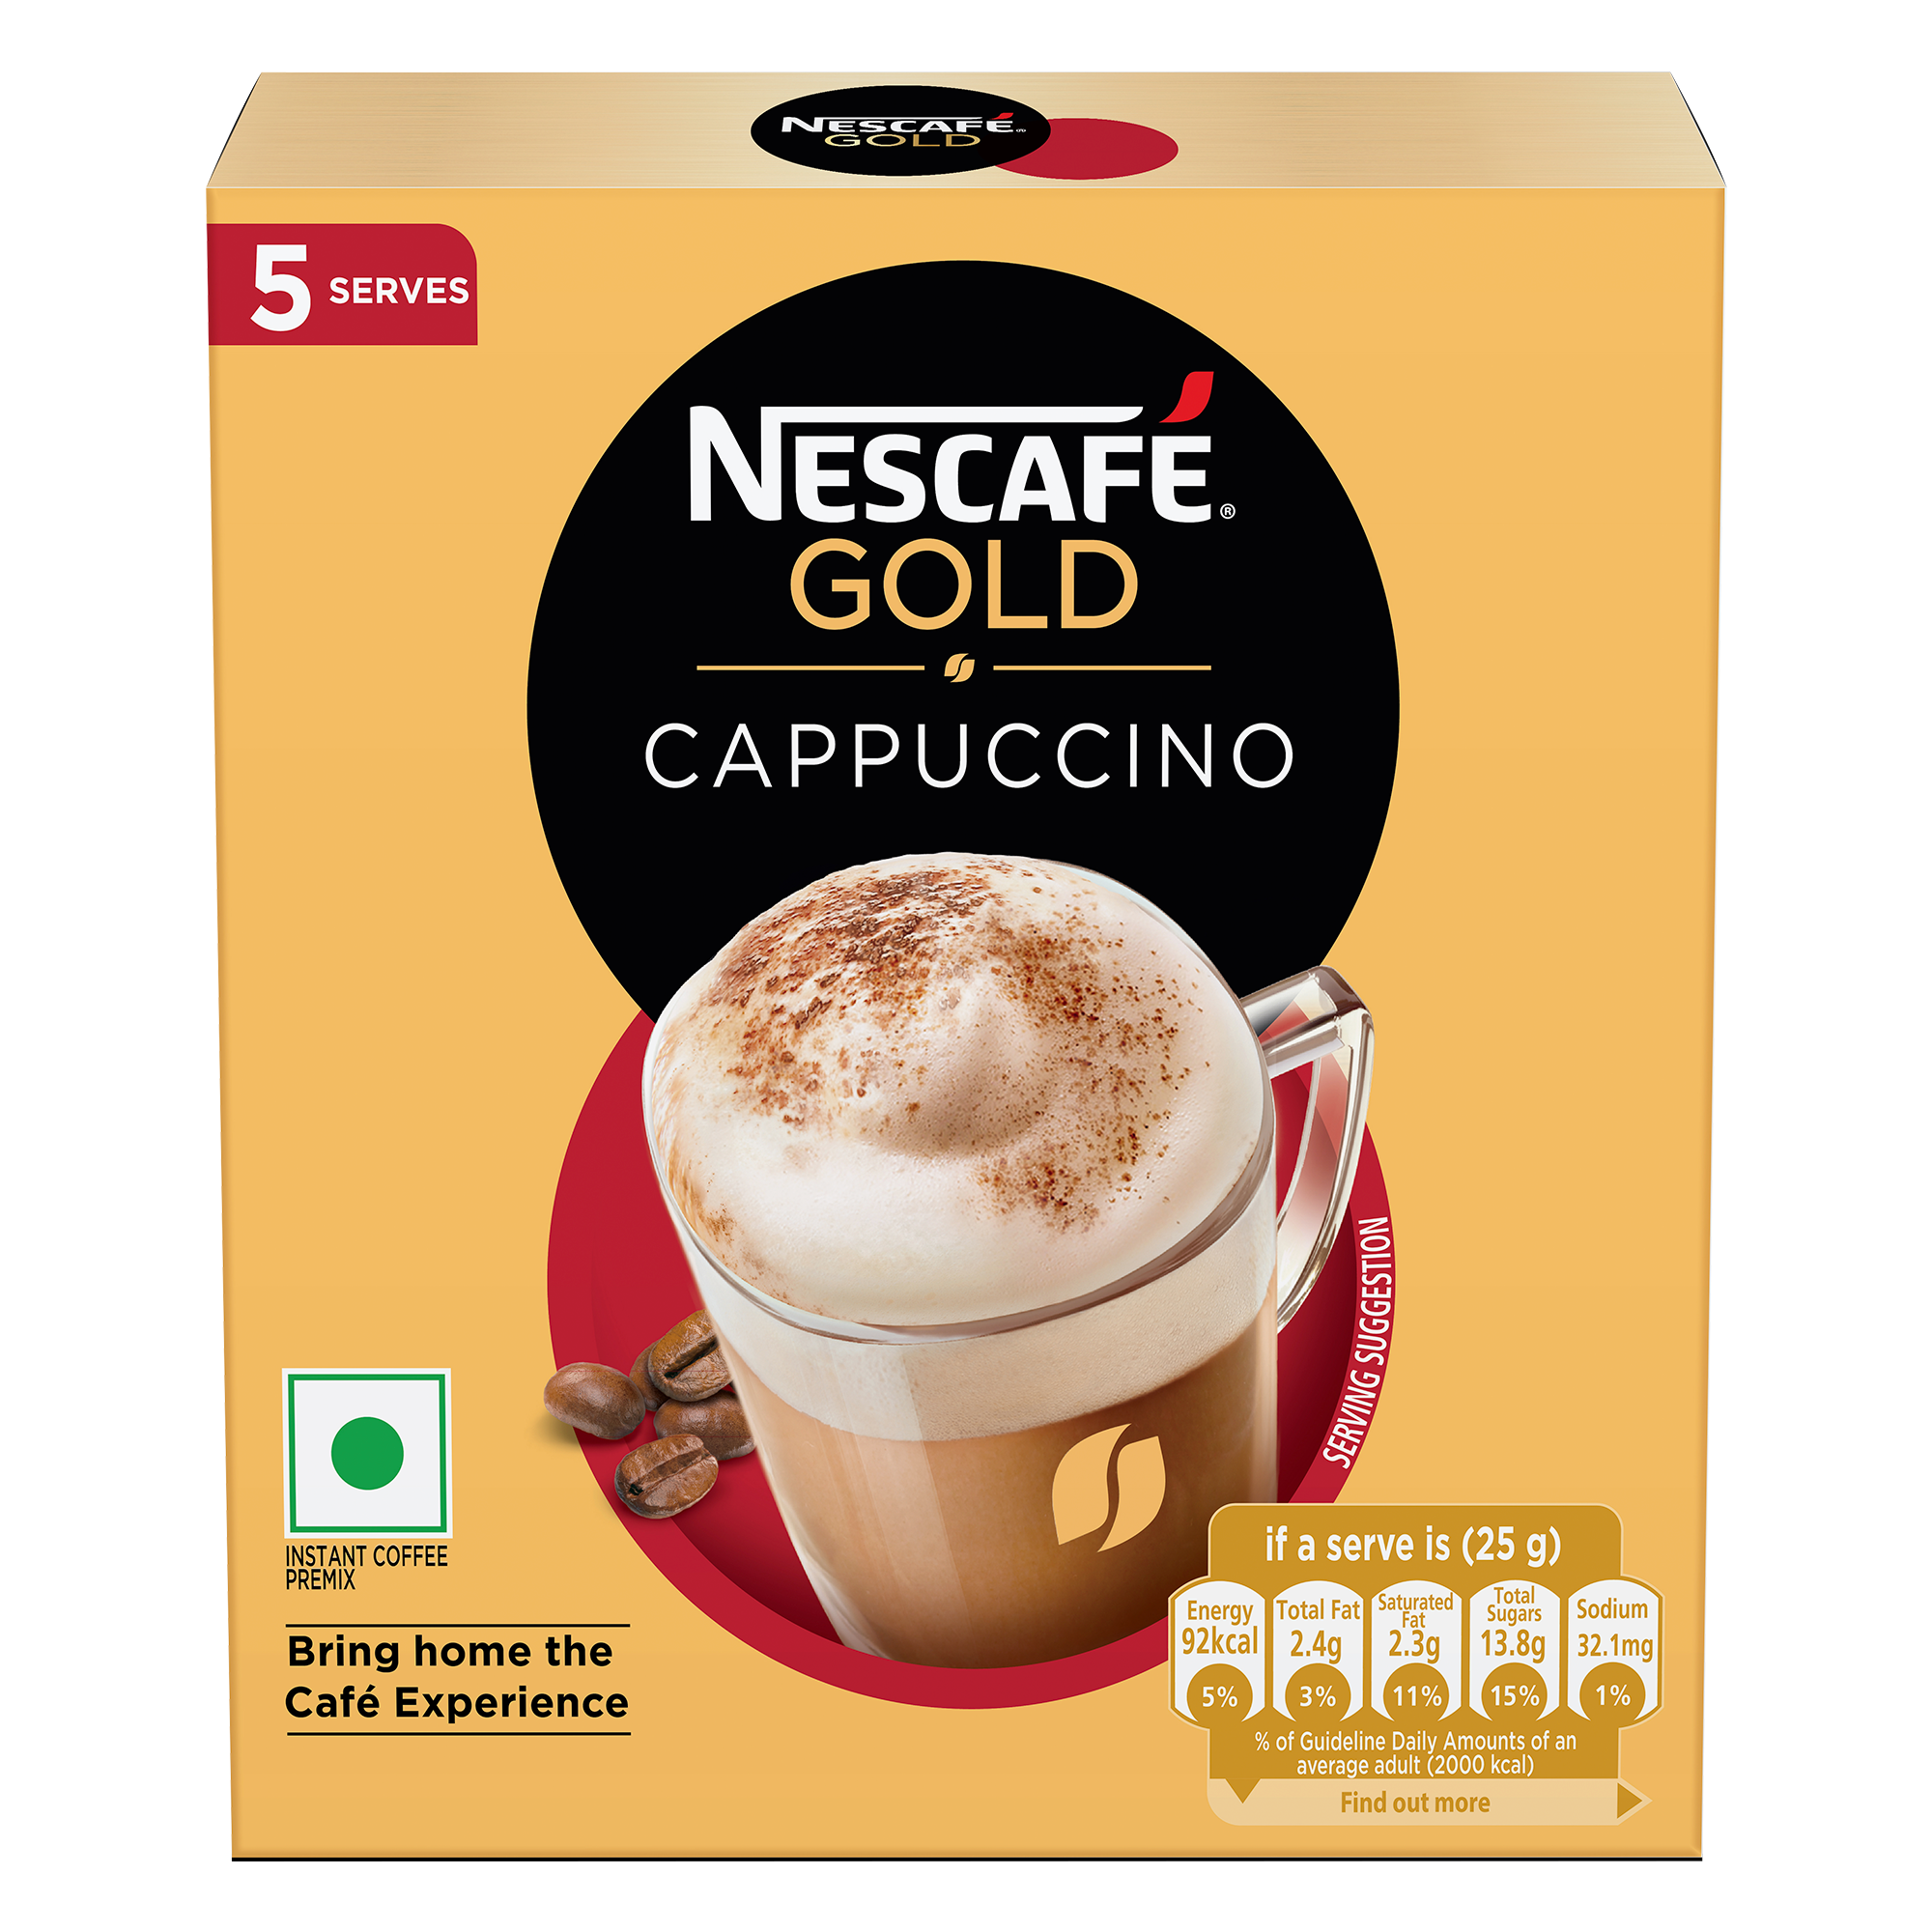 Discover Nescafe Cappuccino Online